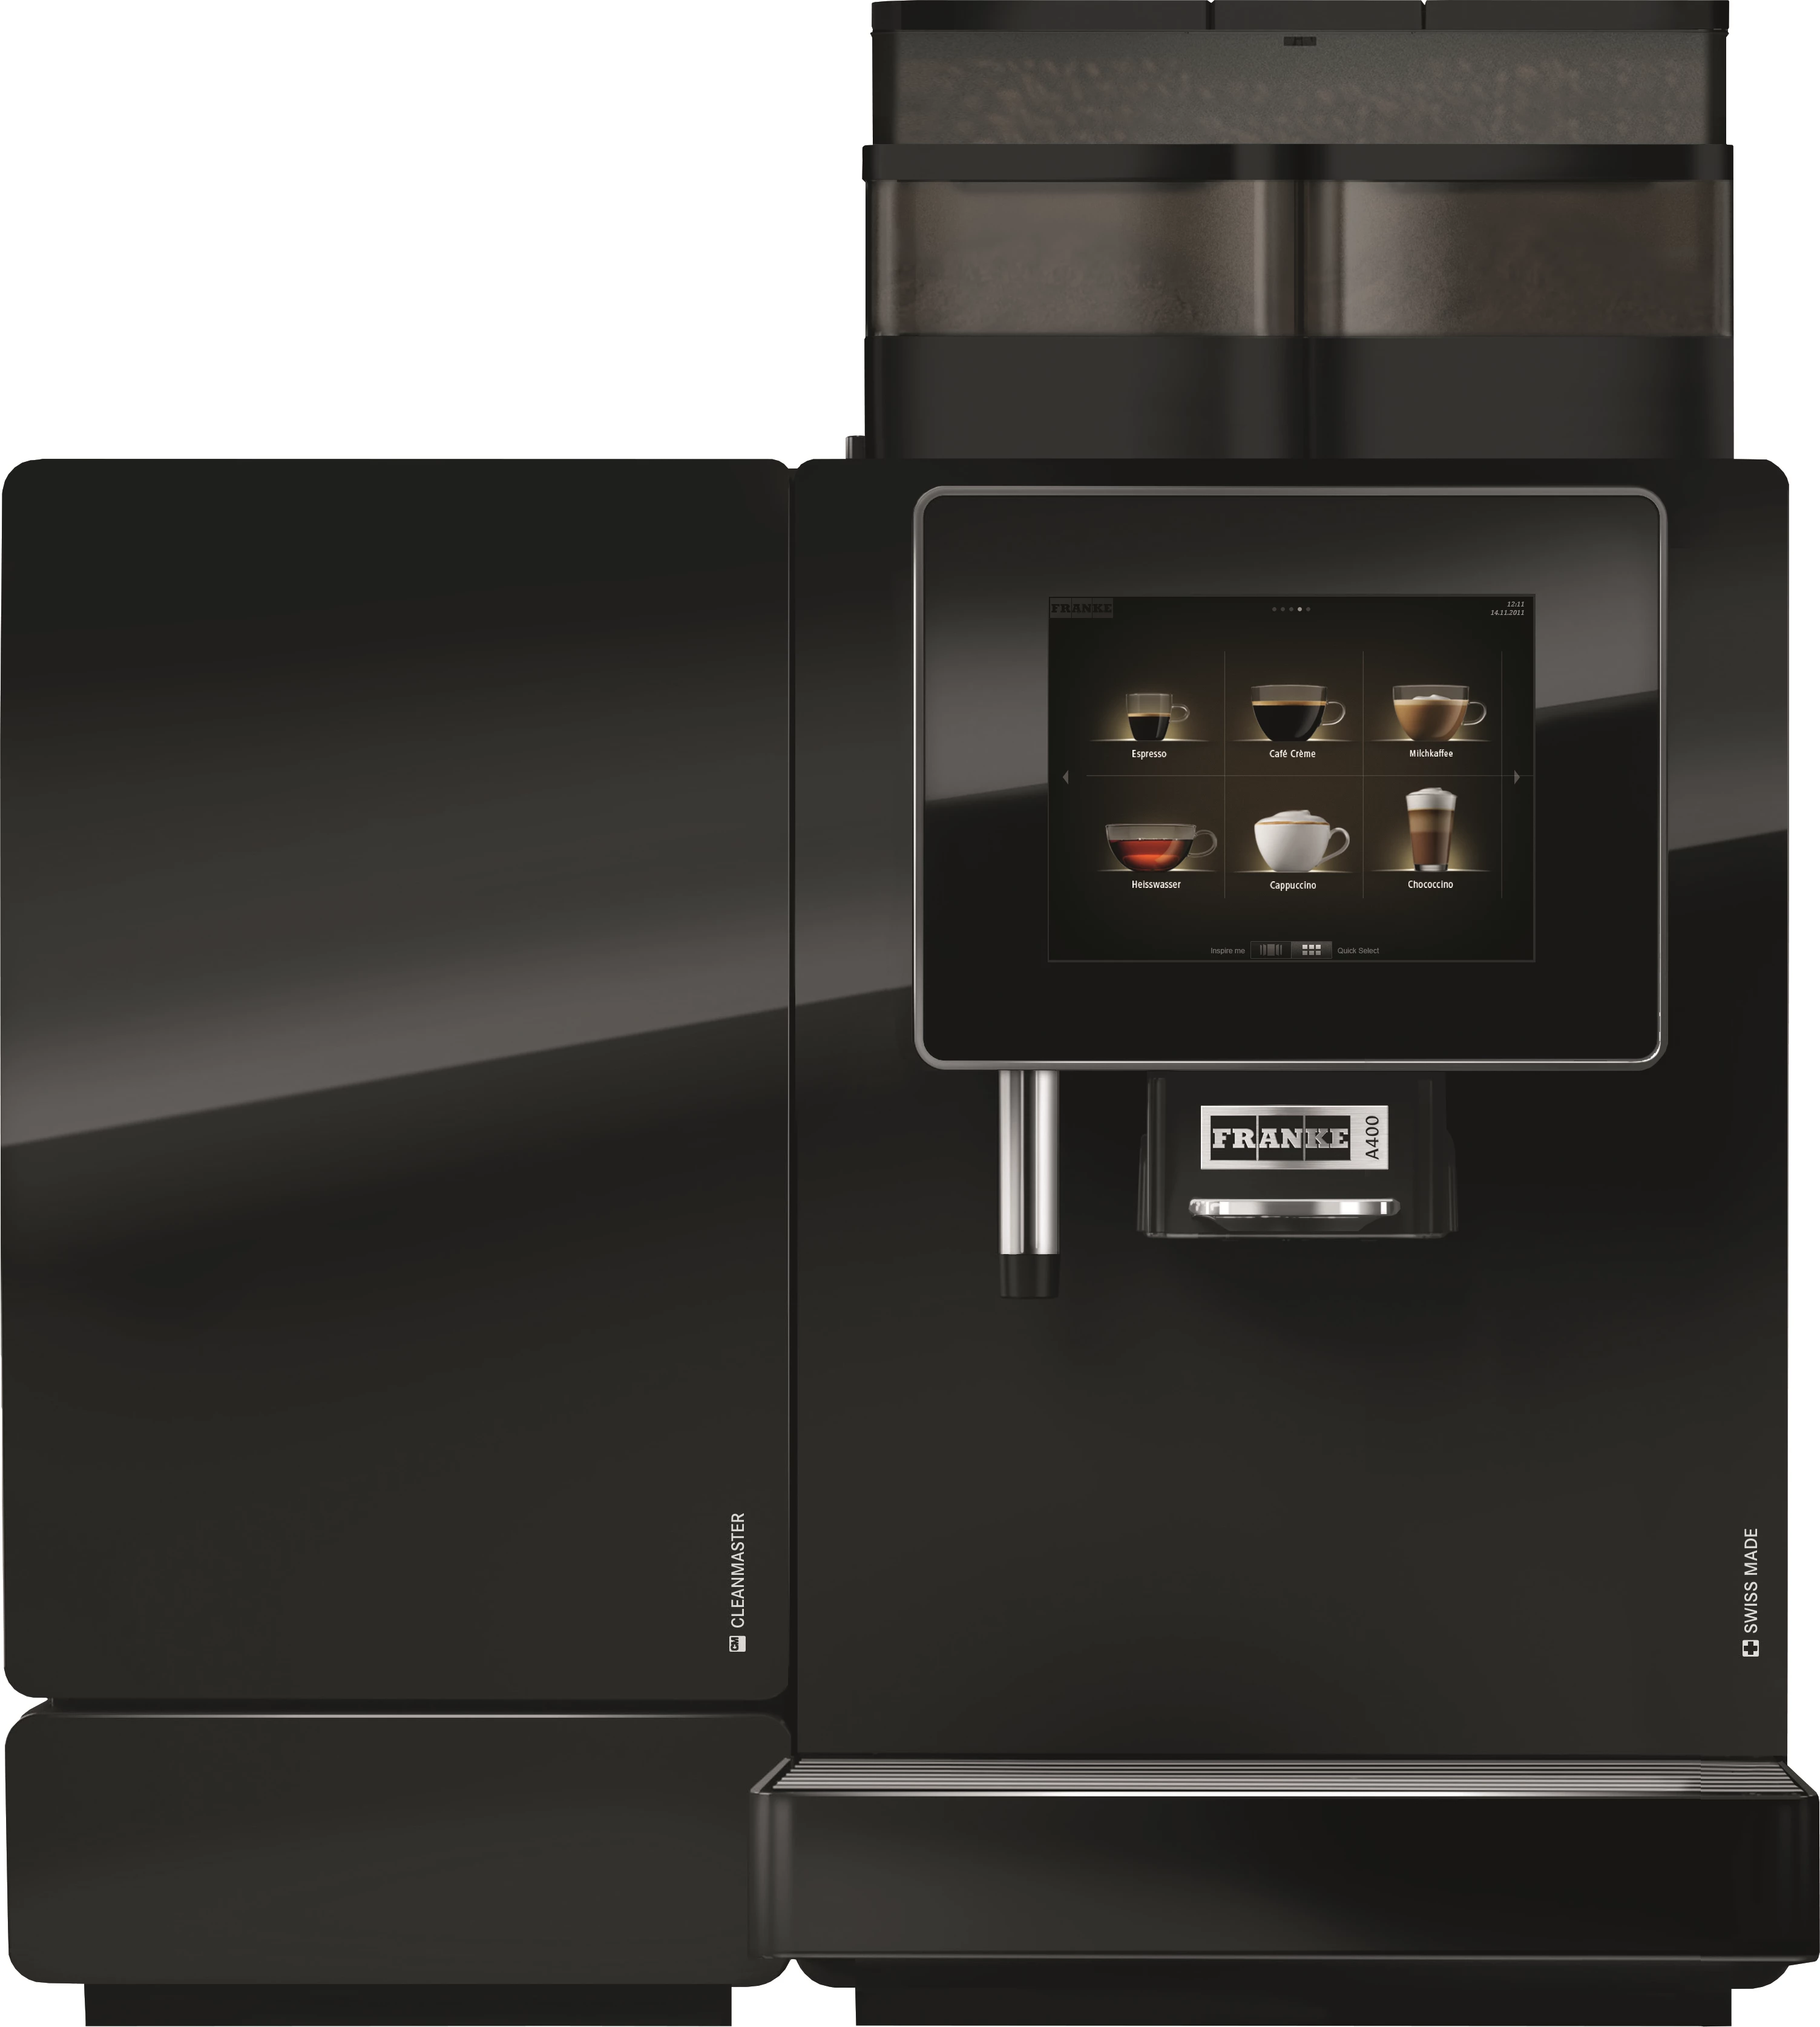 Franke A400 MS kaffemaskiner